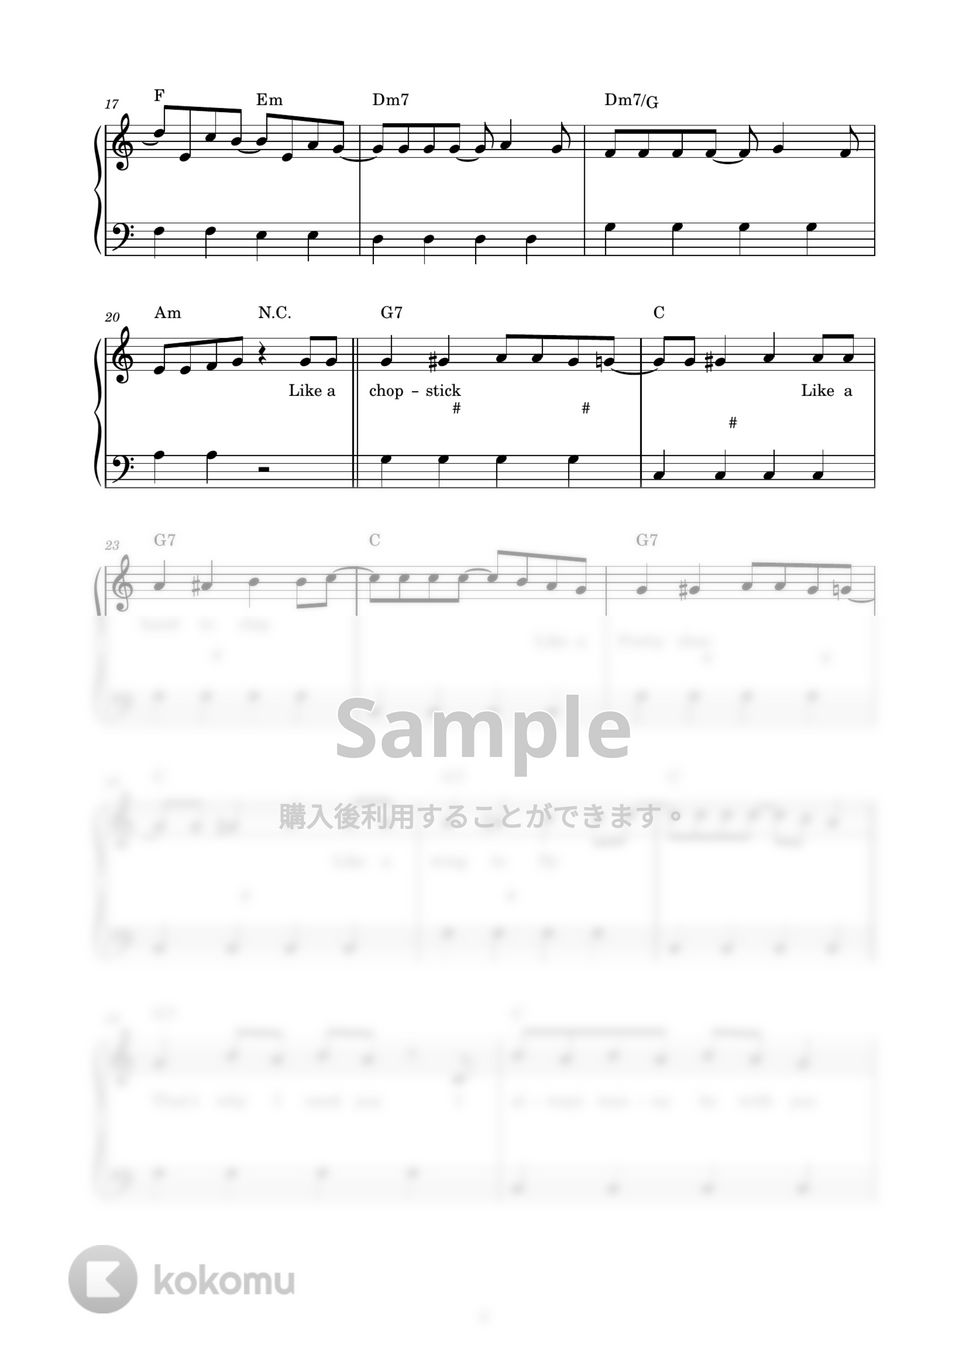 NiziU - Chopstick (ピアノ楽譜 / かんたん両手 / 歌詞付き / ドレミ付き / 初心者向き) by piano.tokyo